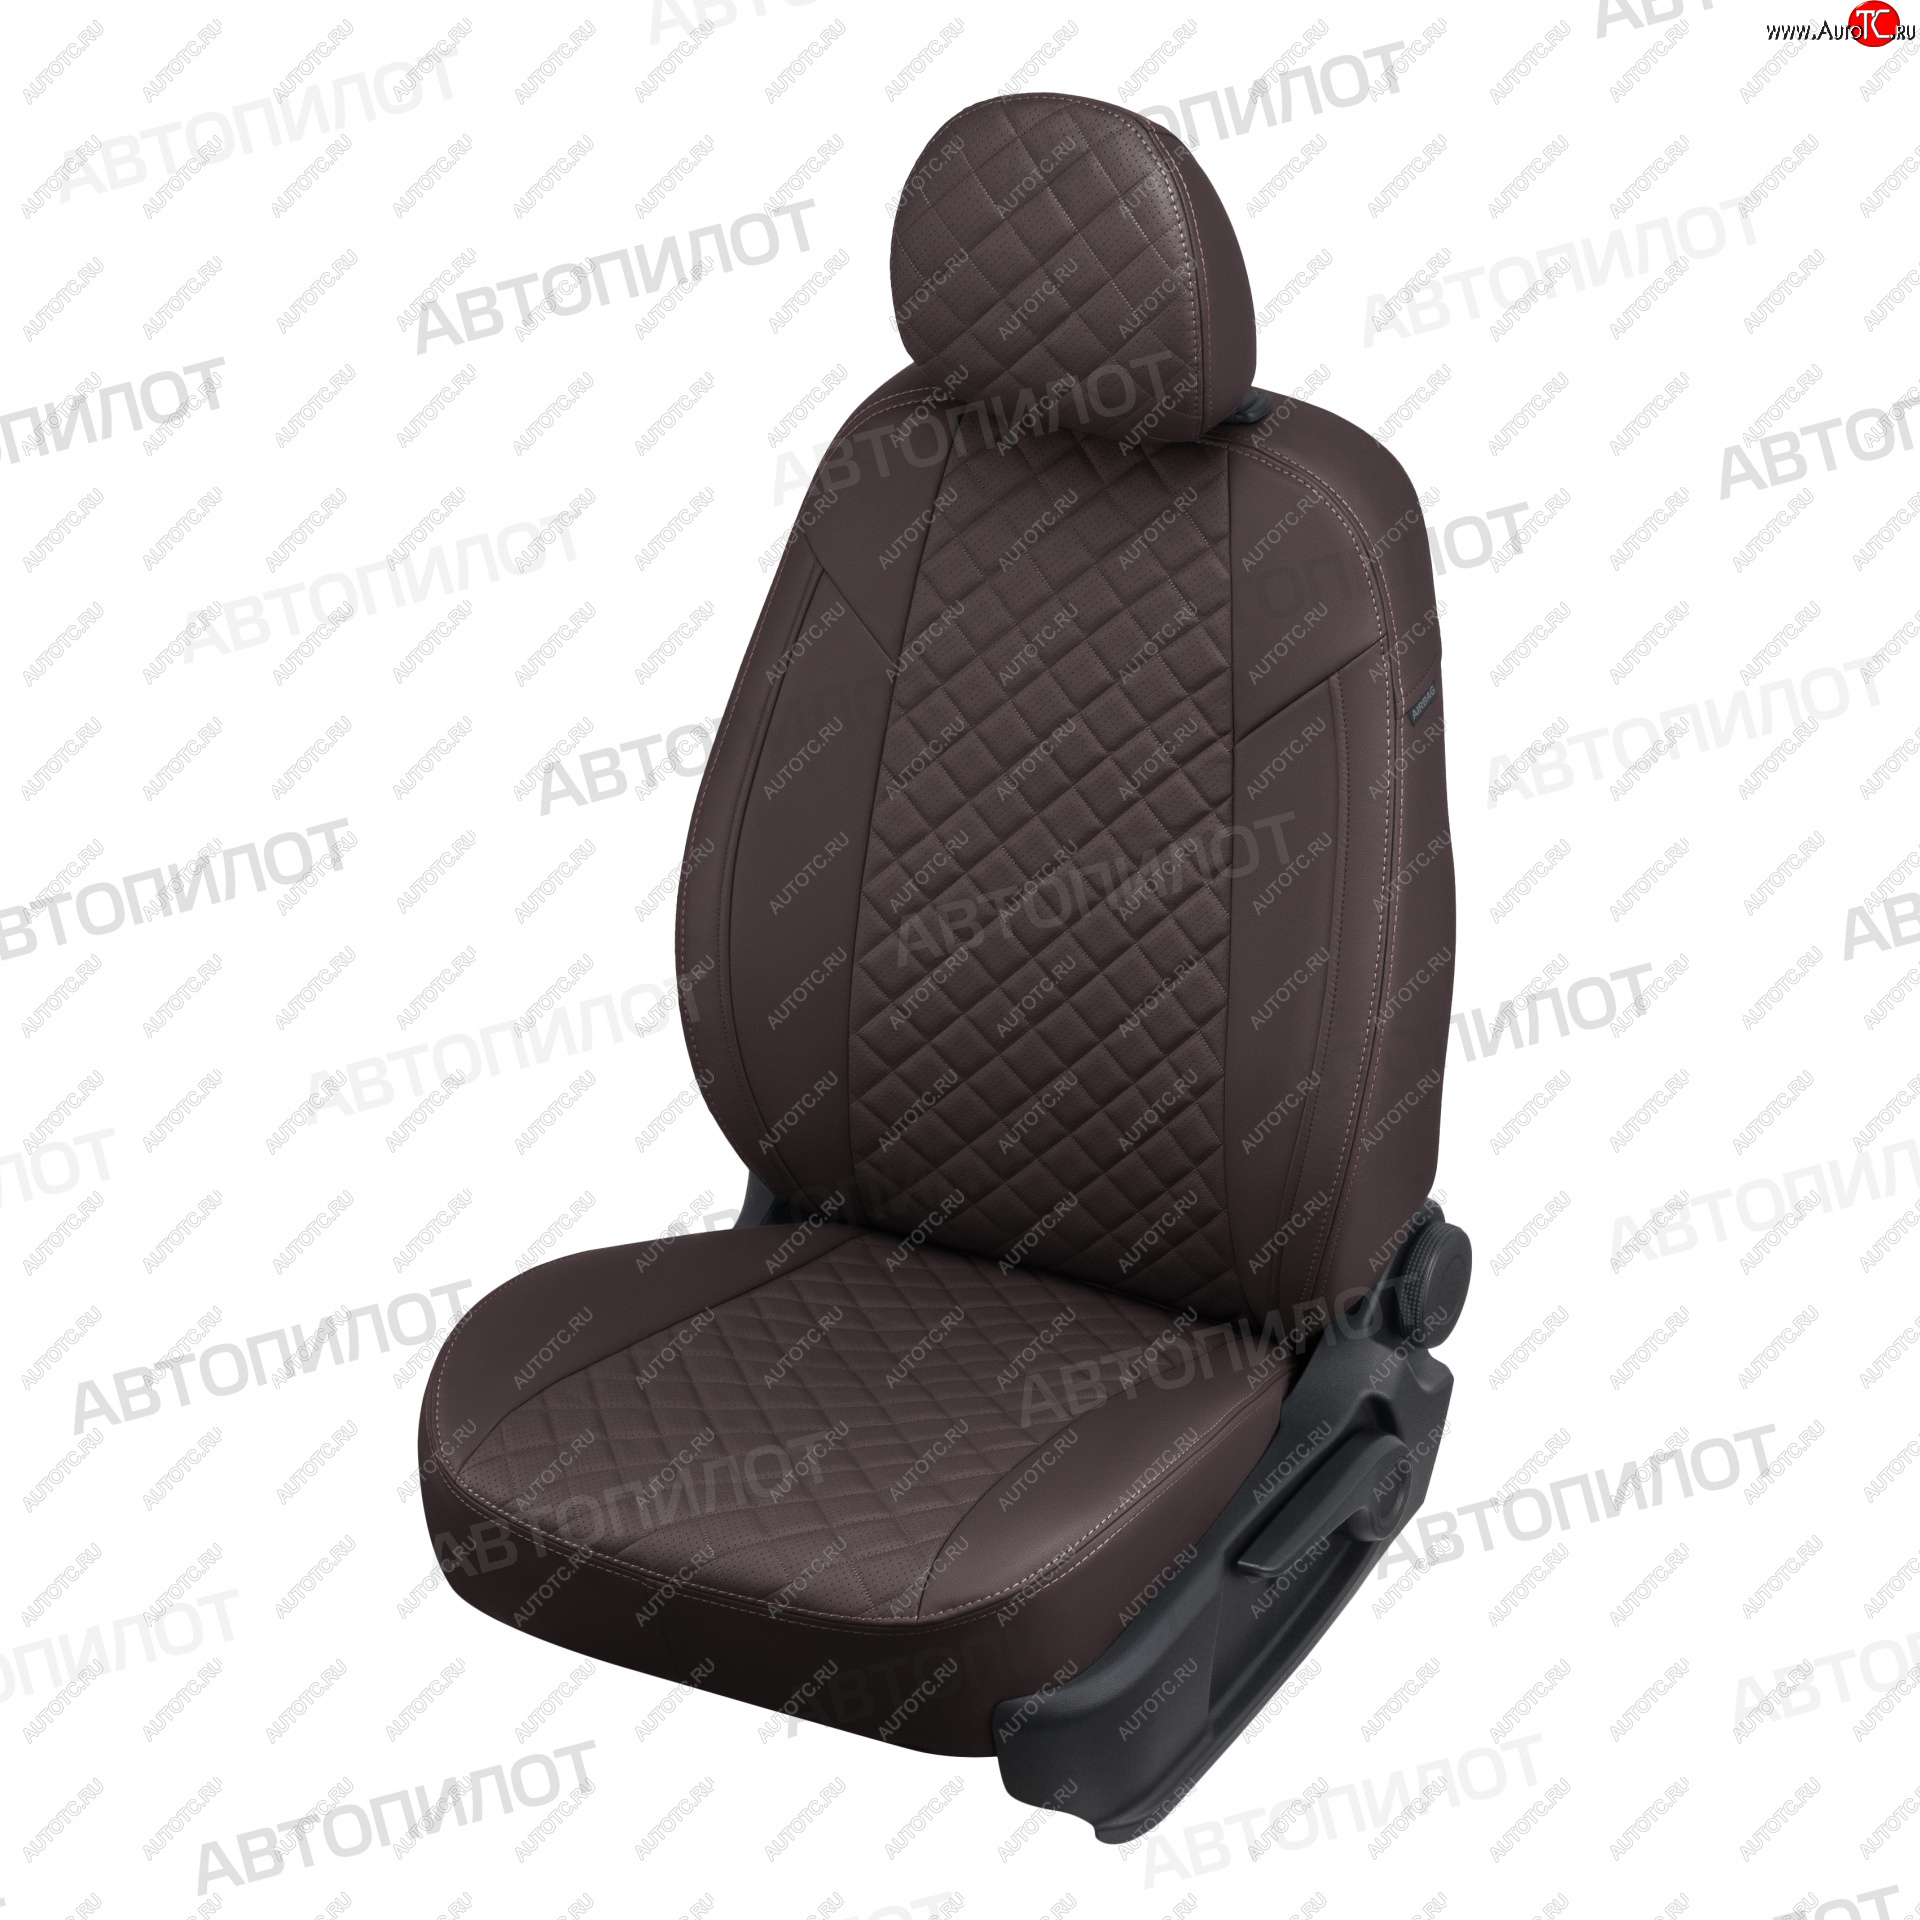 21 599 р. Чехлы сидений (9 мест, экокожа) Автопилот Ромб  Ford Transit  4 (2014-2024) (шоколад)